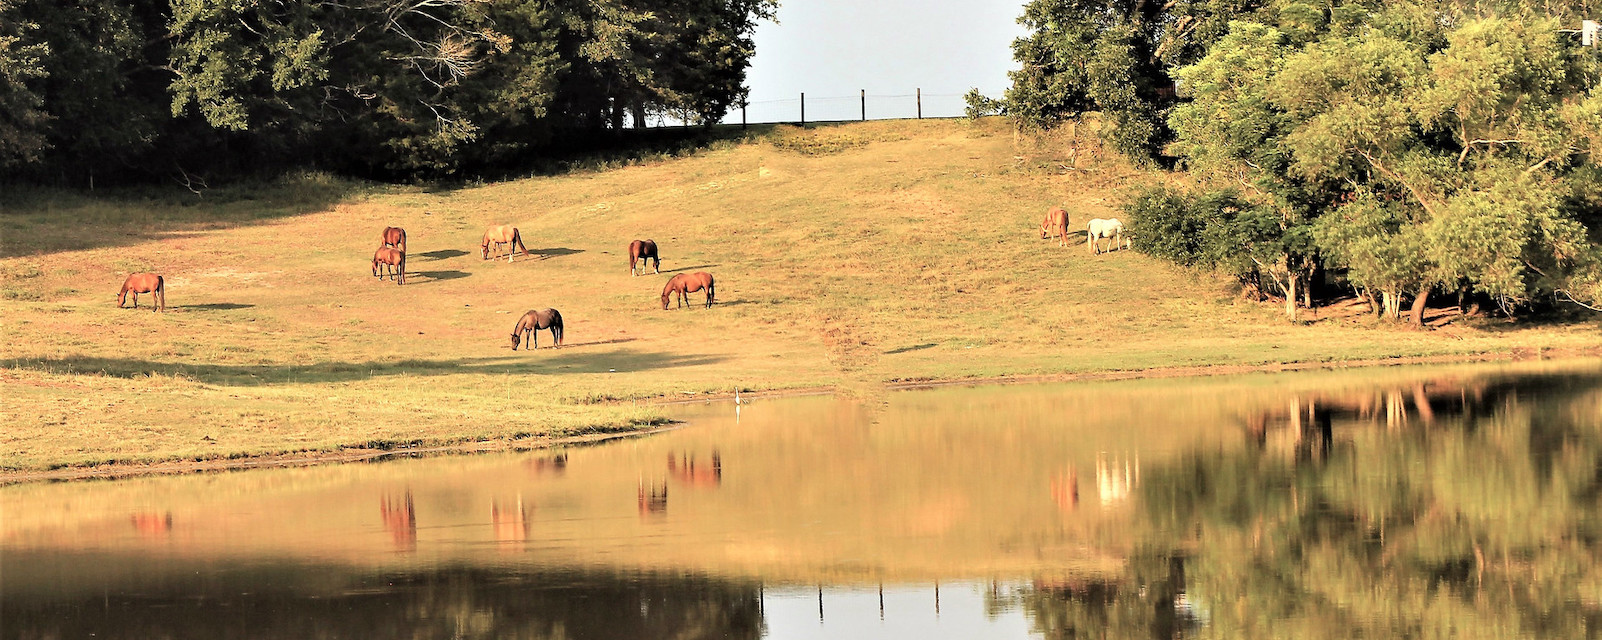 Horses on farmland